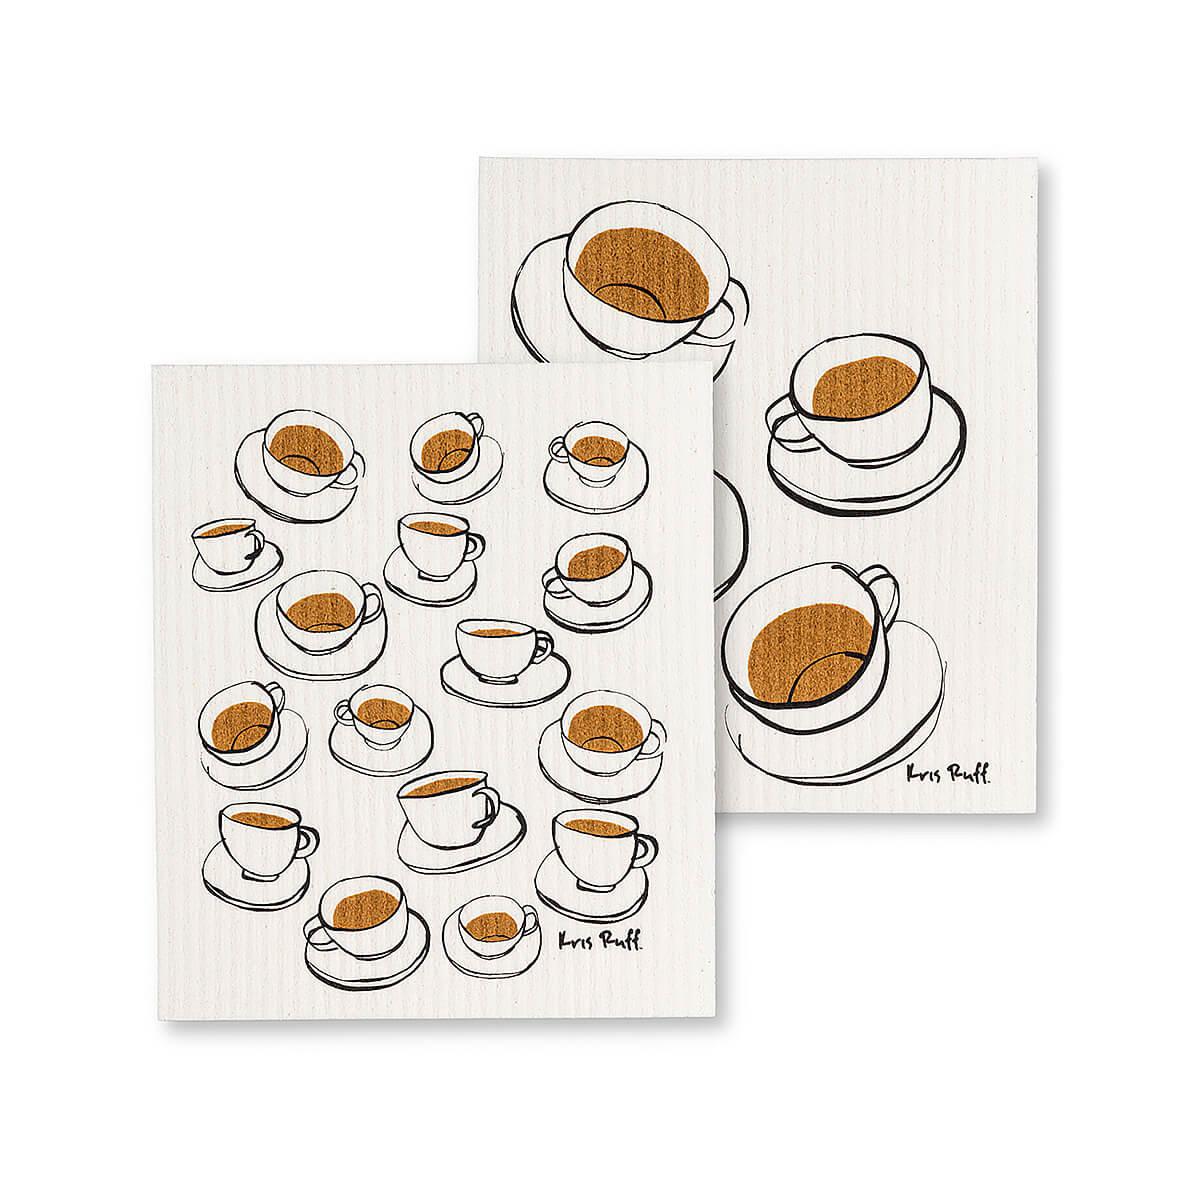  Tea Cups Dishcloths - 2 Pack